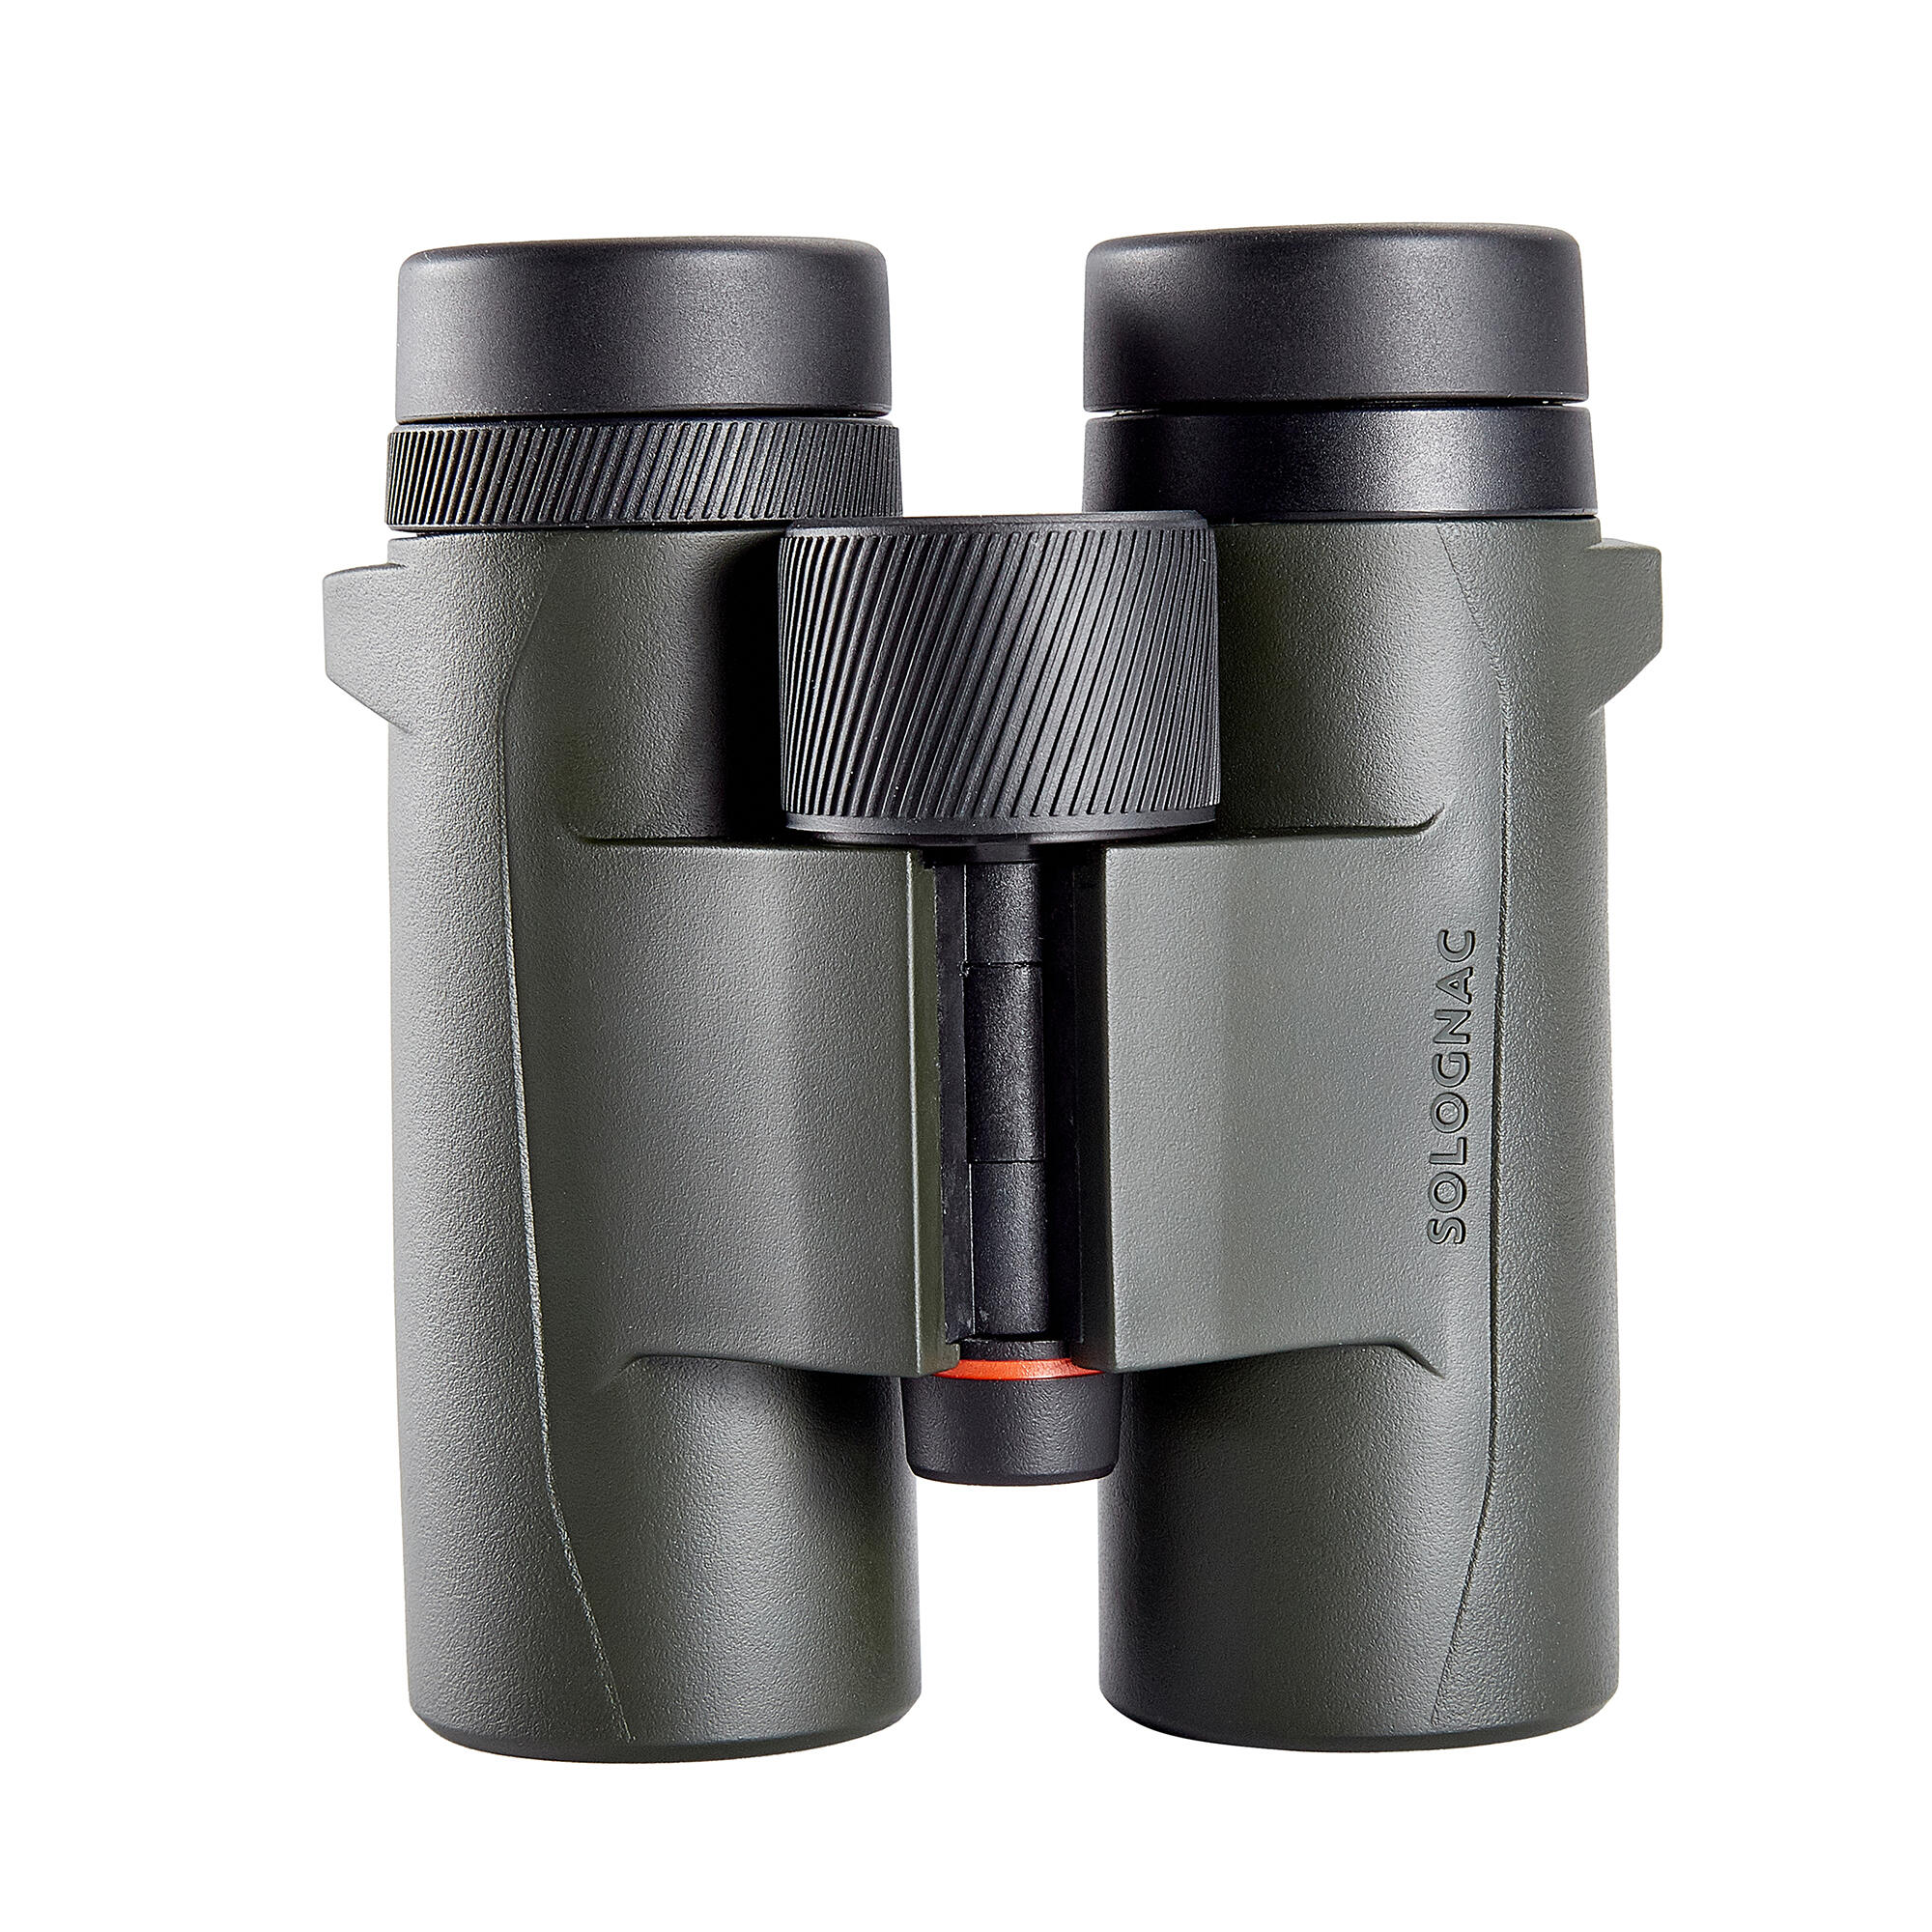 Waterproof hunting binoculars 500 10x32 - khaki 8/13